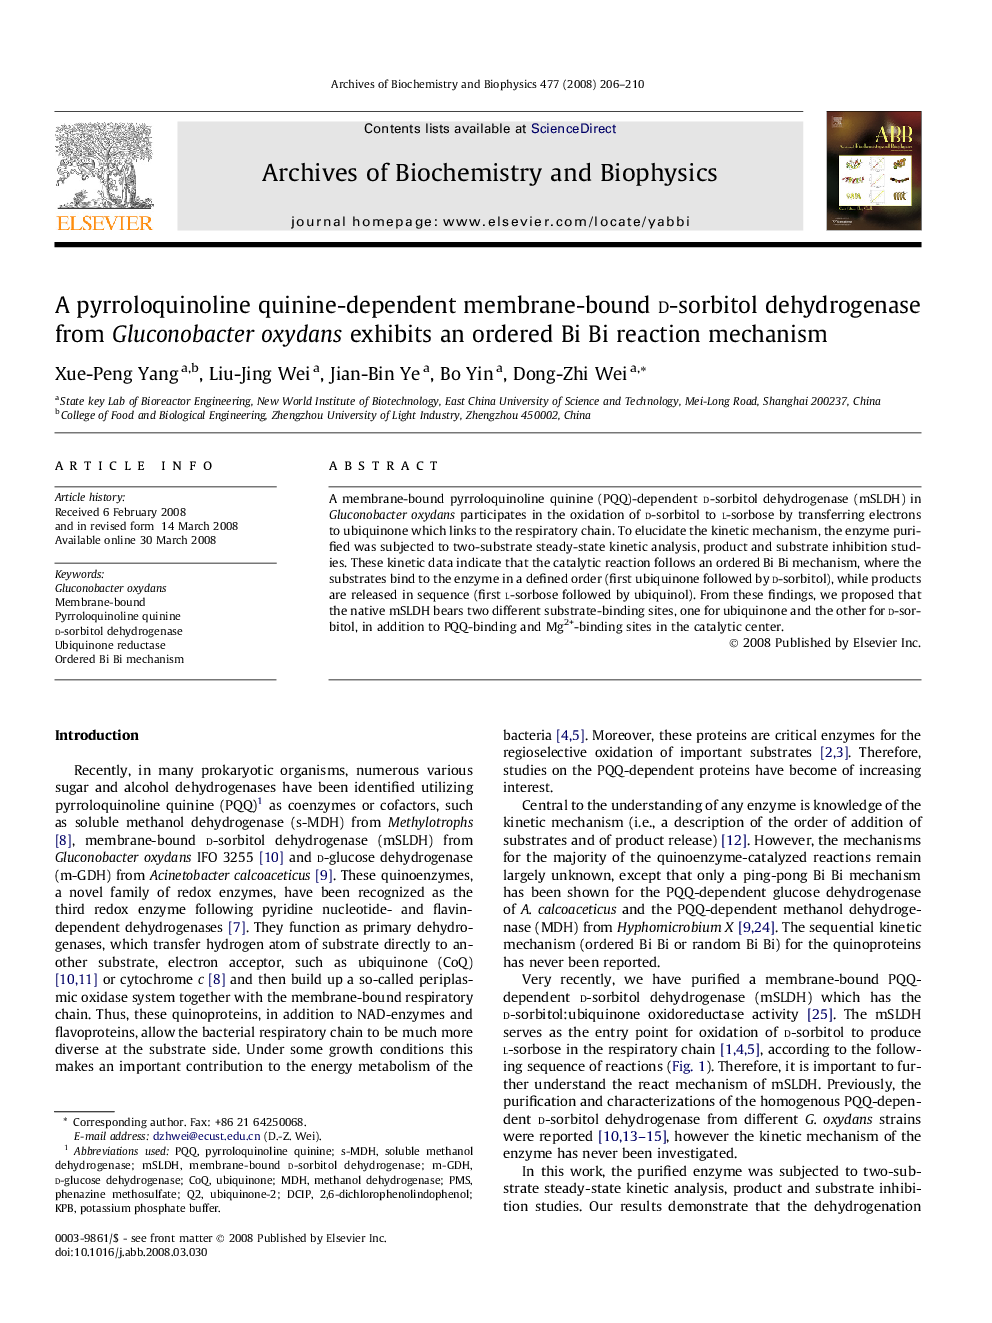 A pyrroloquinoline quinine-dependent membrane-bound d-sorbitol dehydrogenase from Gluconobacter oxydans exhibits an ordered Bi Bi reaction mechanism